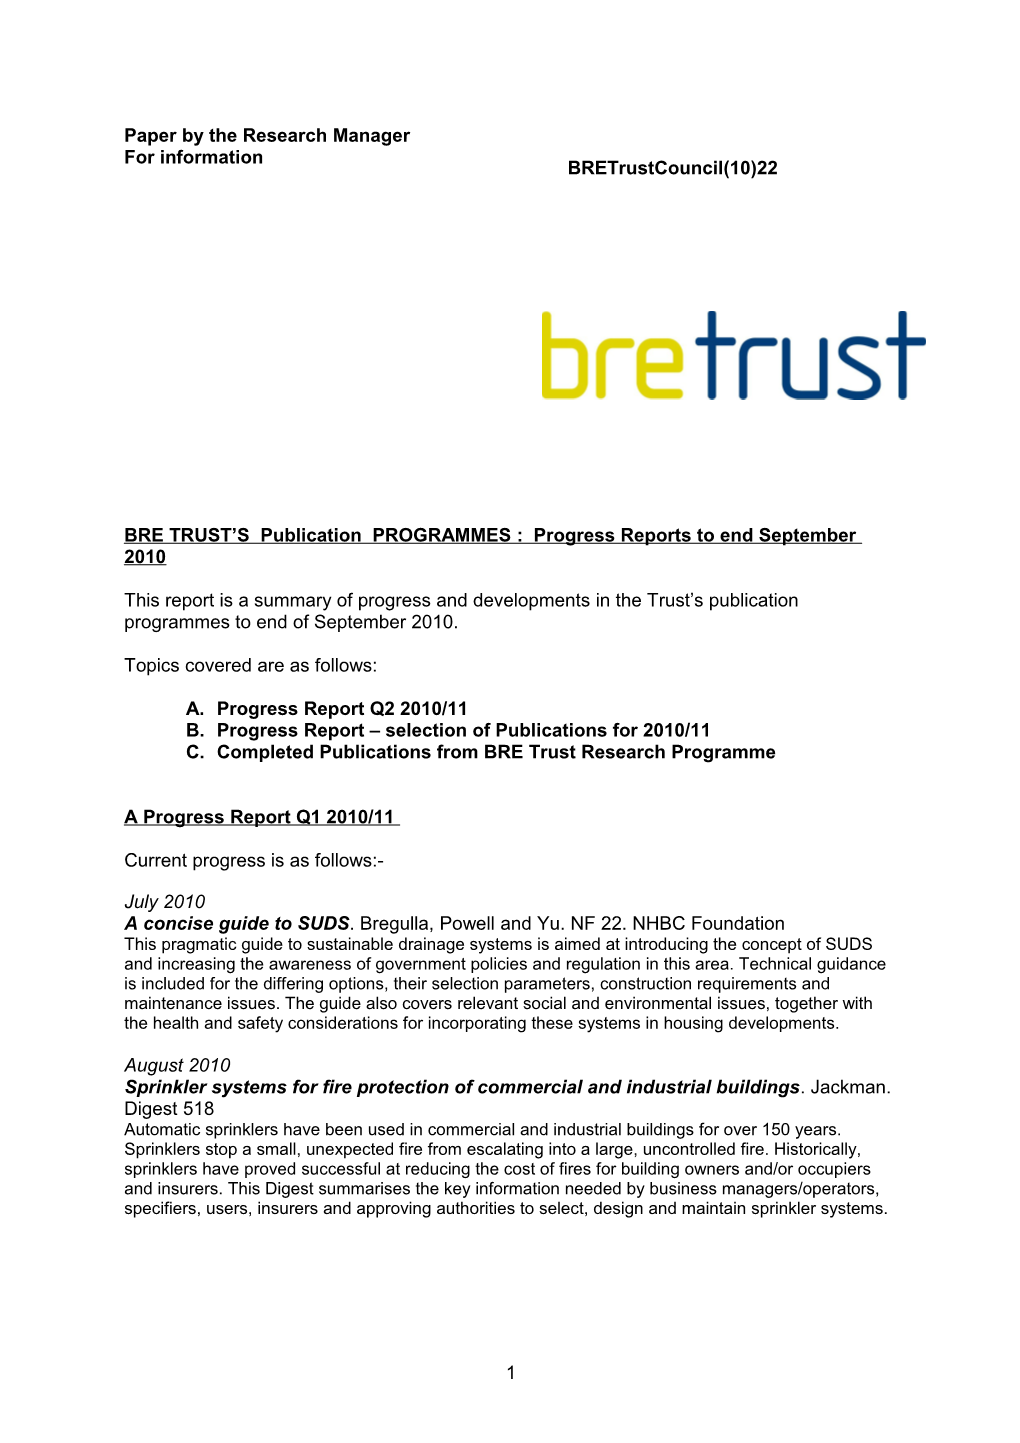 BRE TRUST S Publication PROGRAMMES : Progress Reports to End September 2010